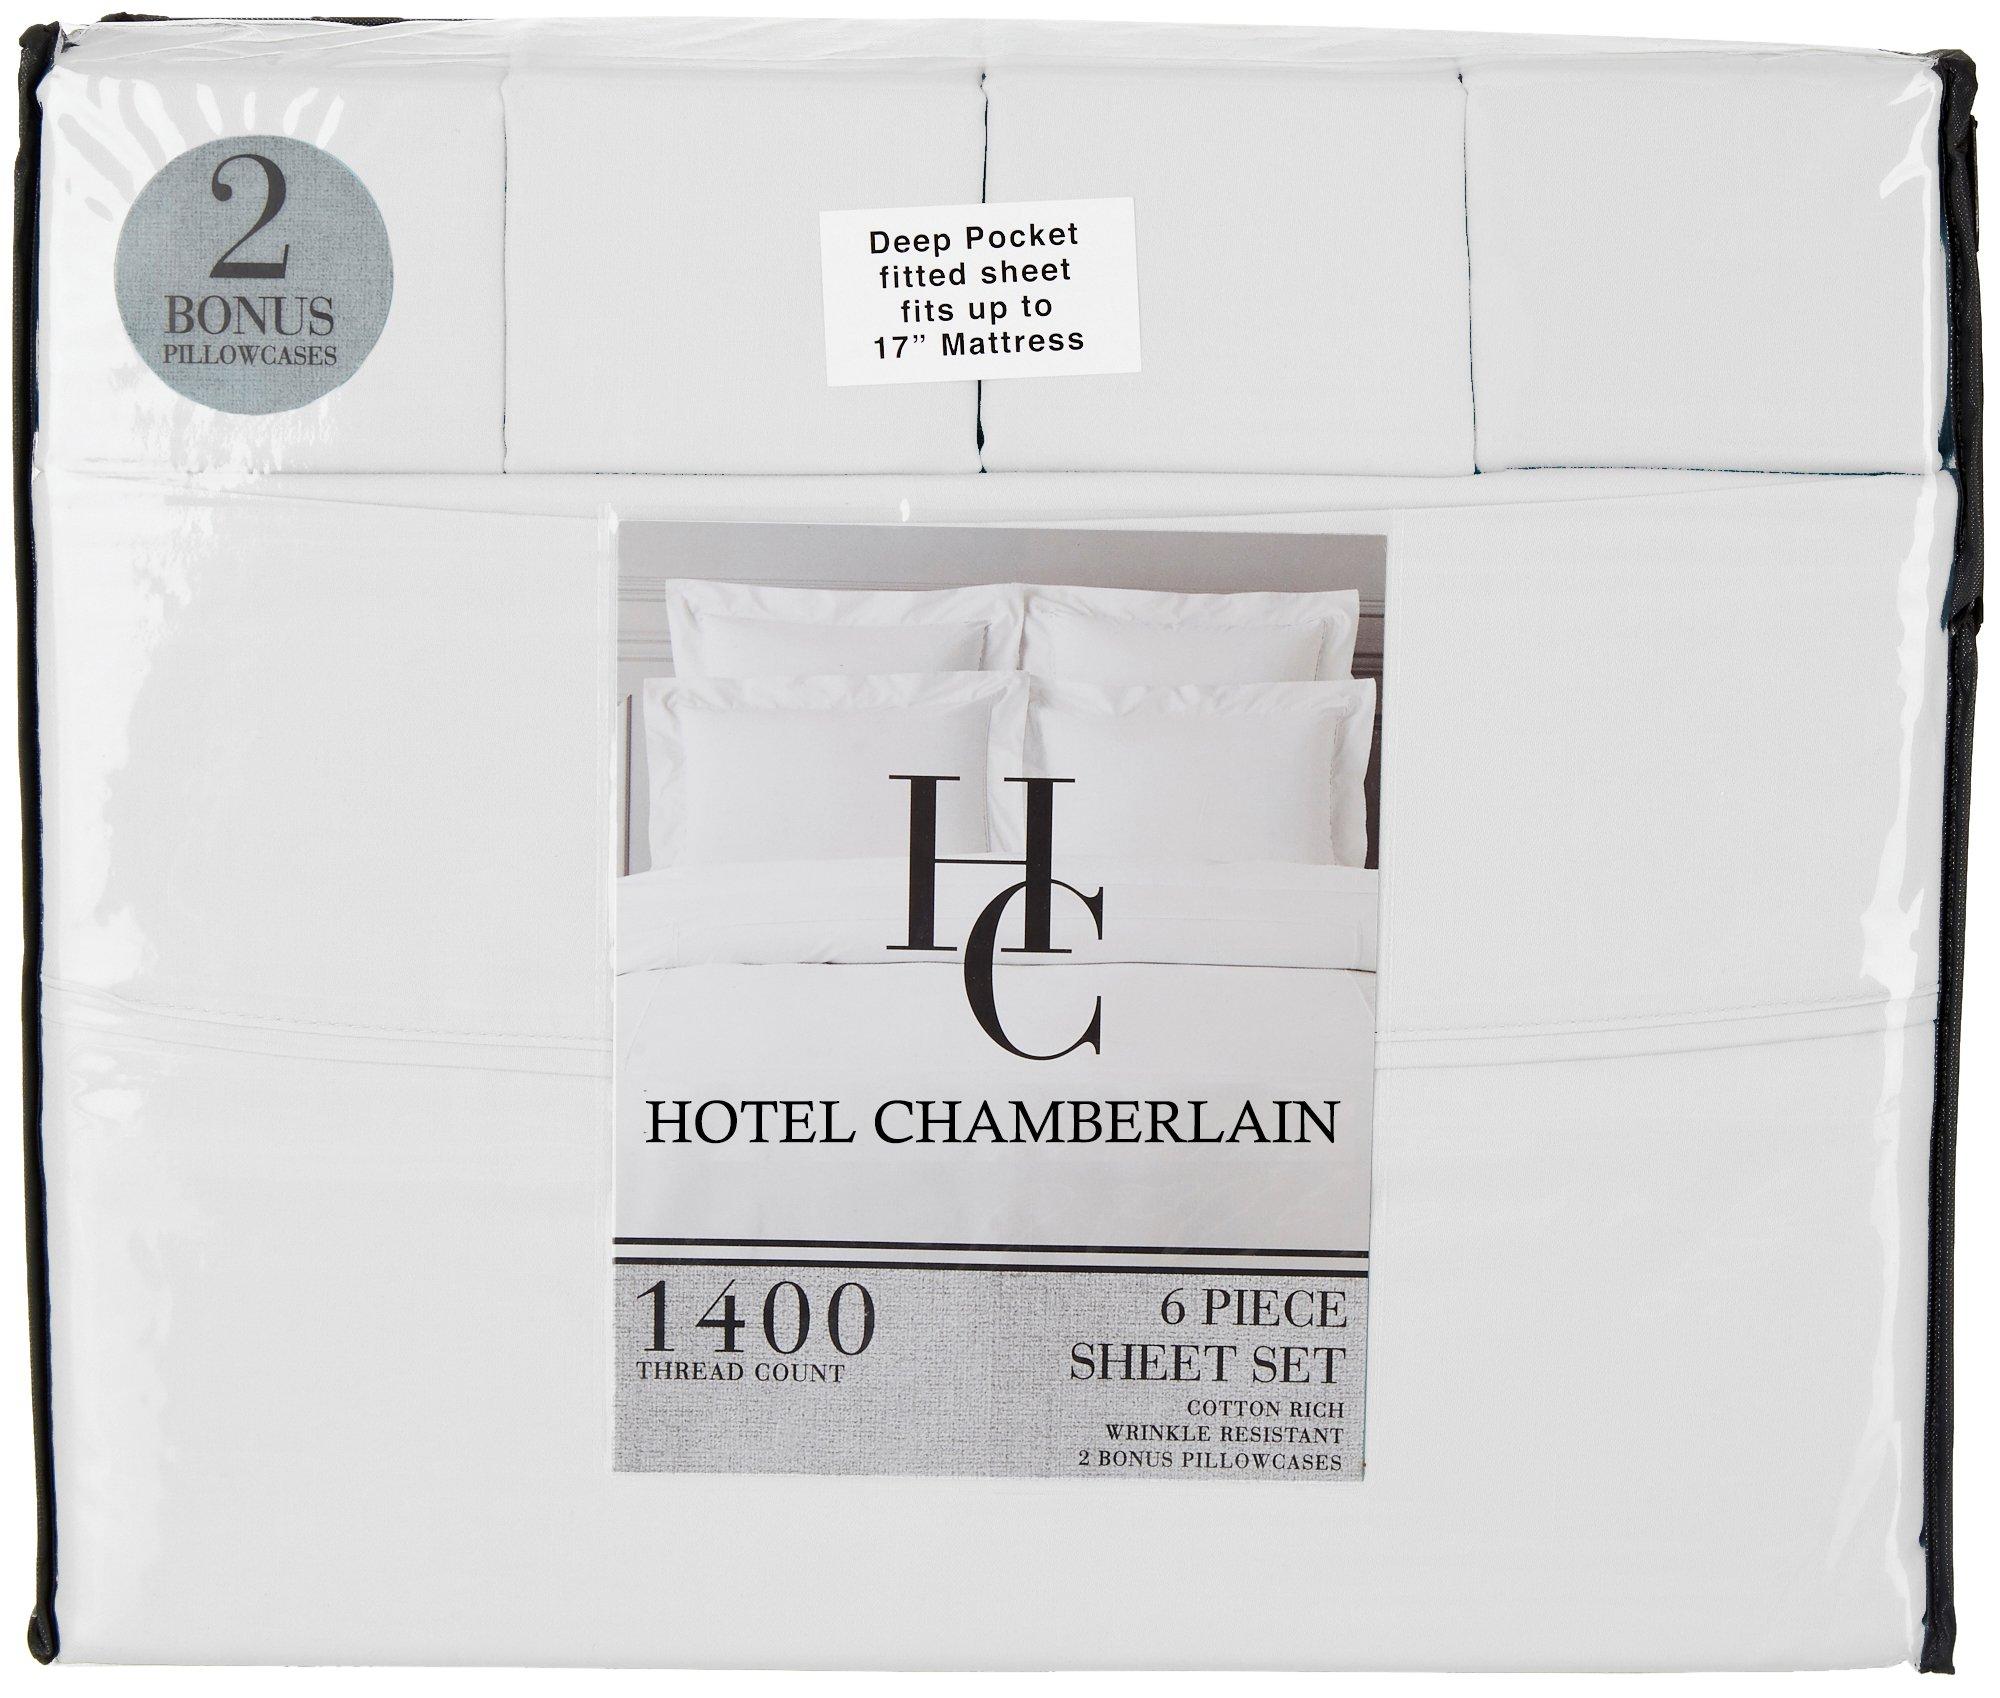 Hotel Signature 800 Thread Count Cotton 6-Piece Sheet Set